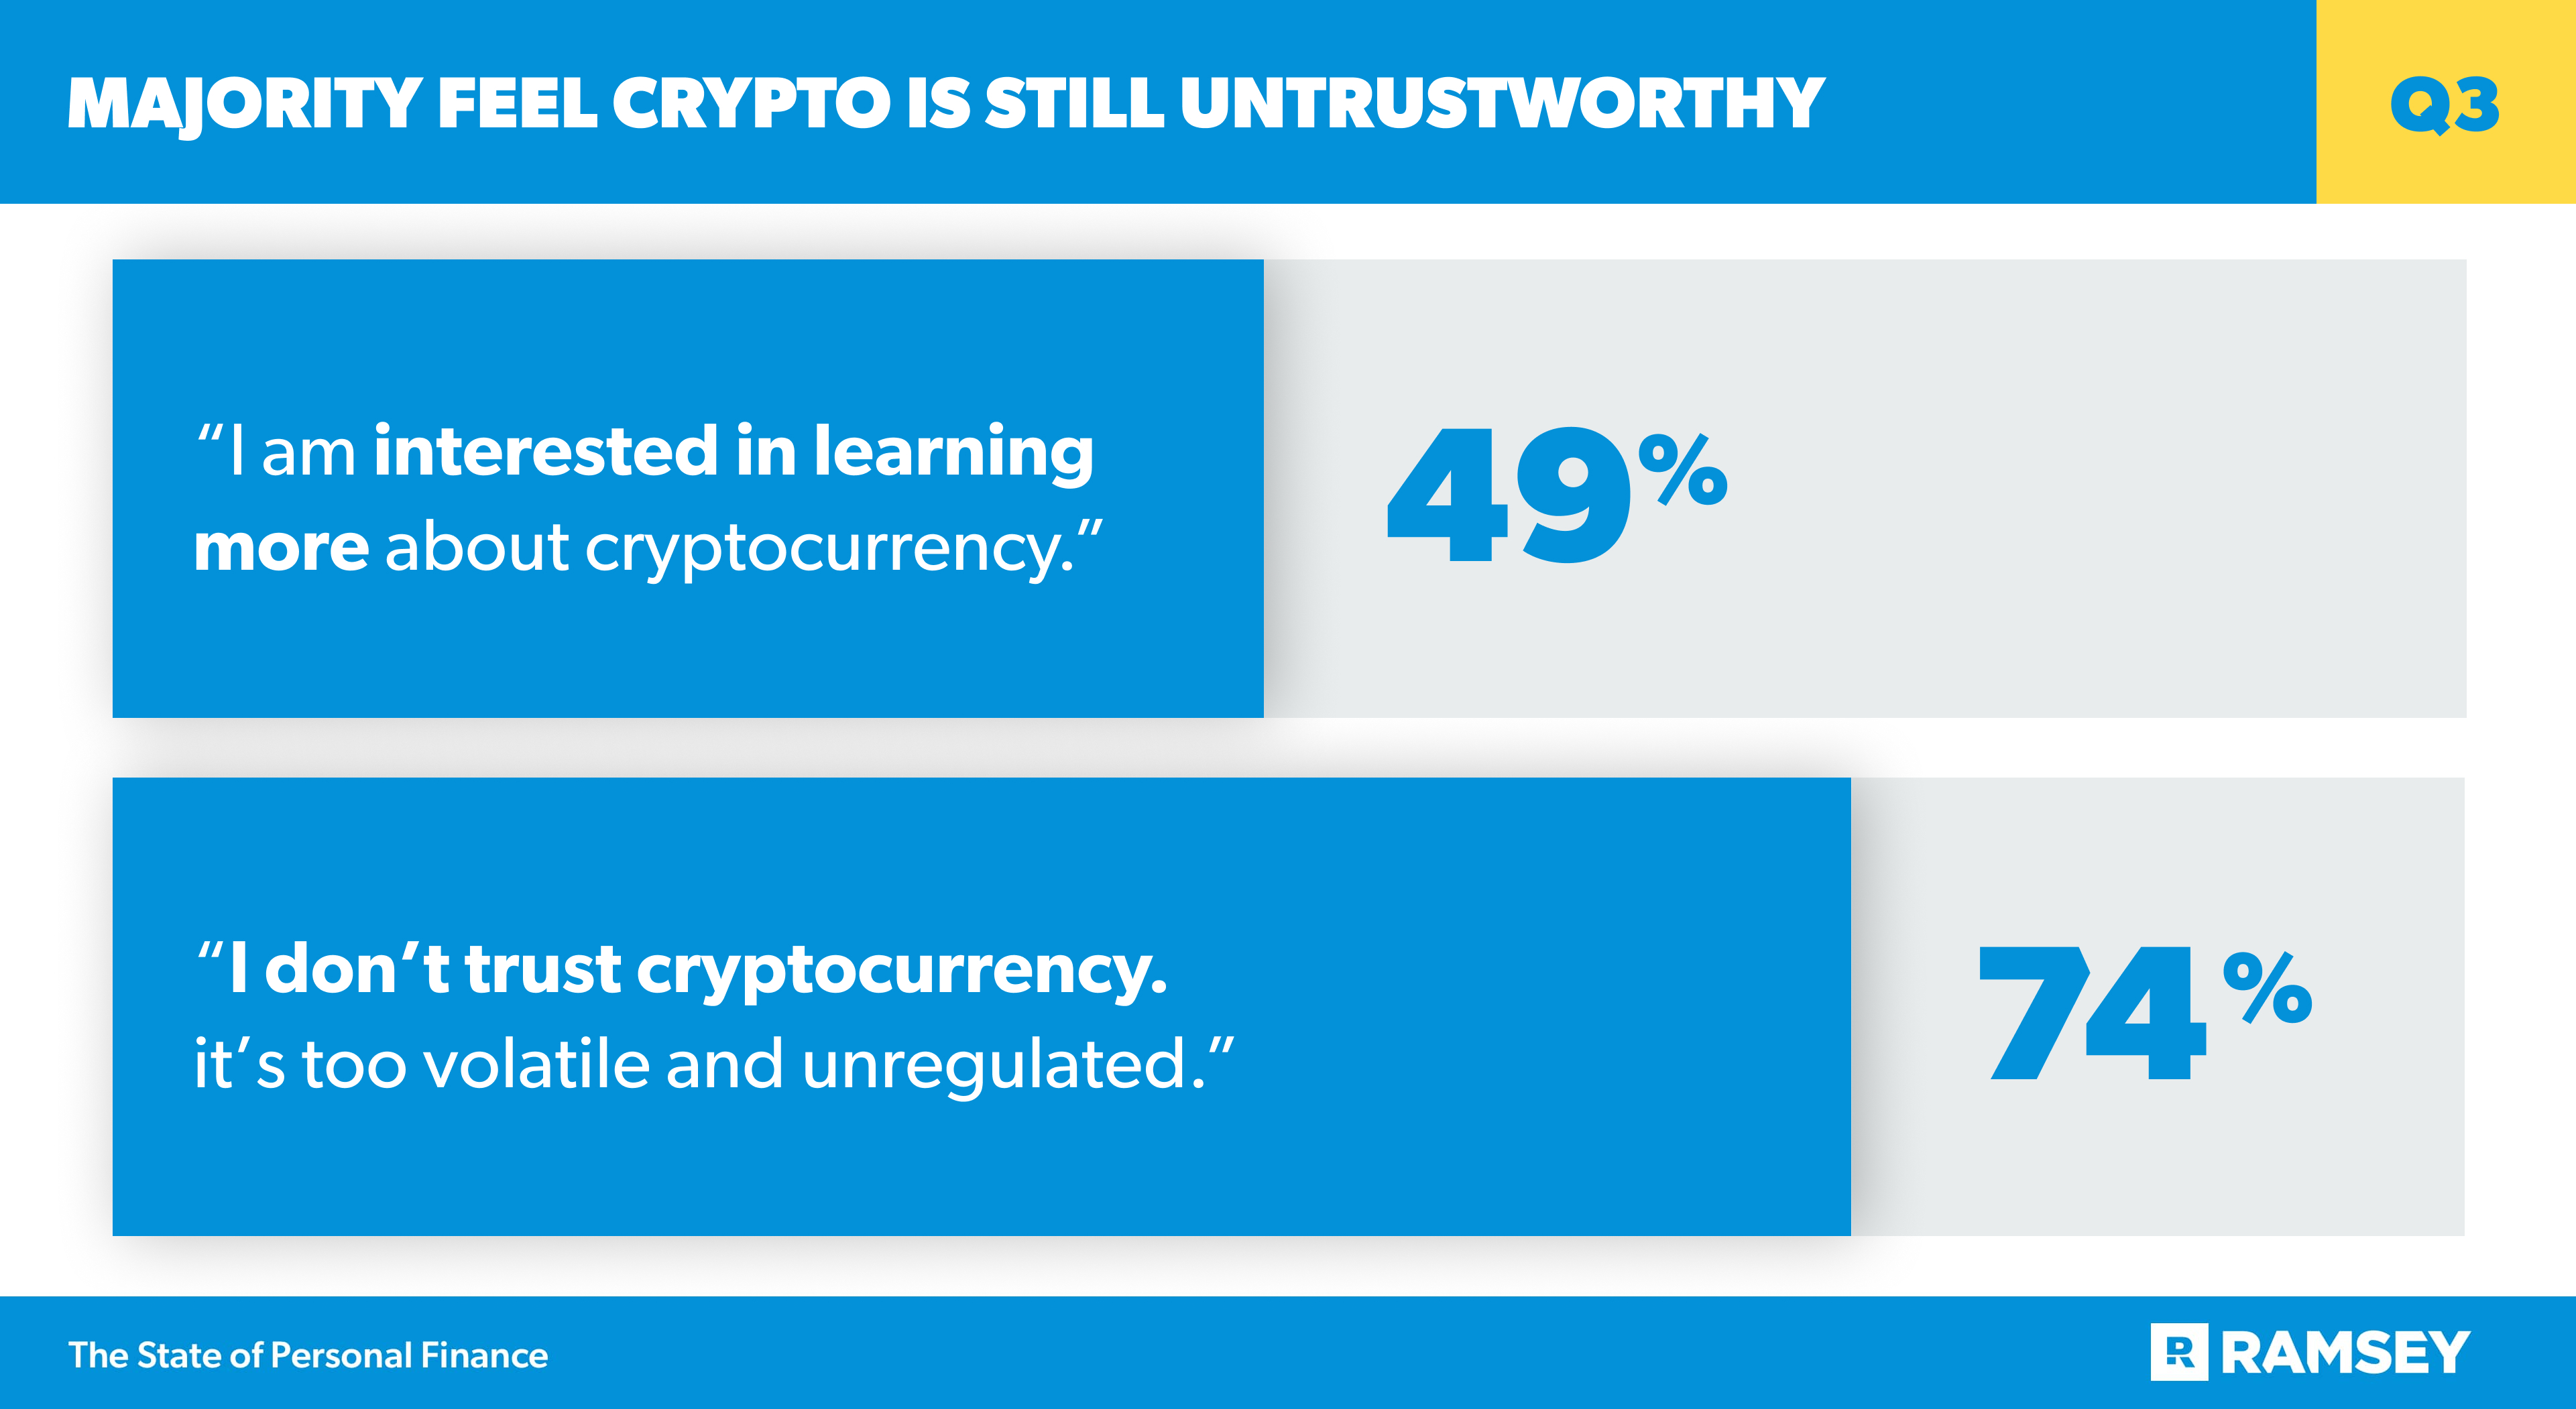 Majority feel Cryptocurrency is untrustworthy 